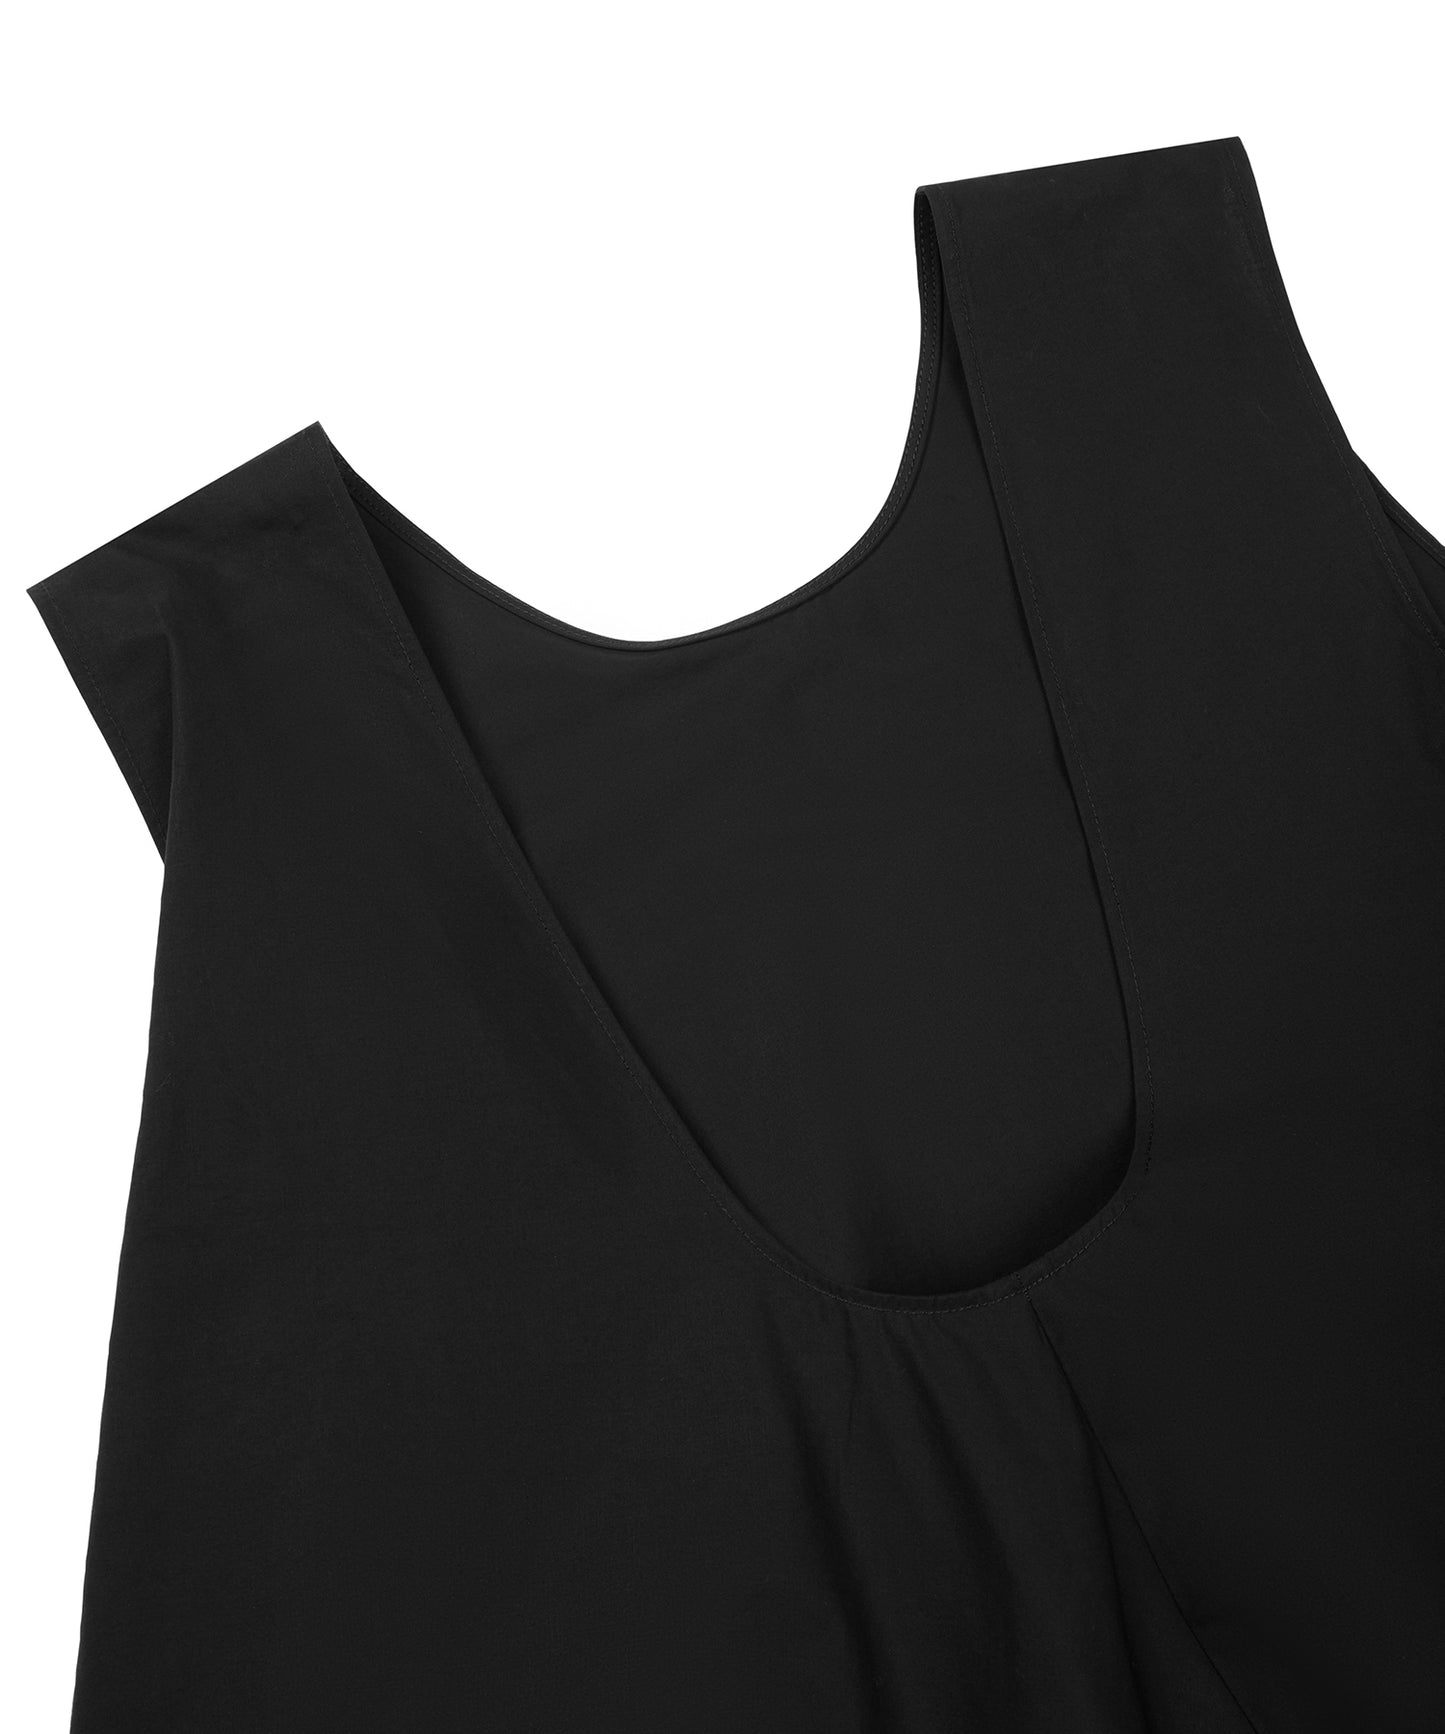 U-neck Asymmetric-hem Cotton Dress